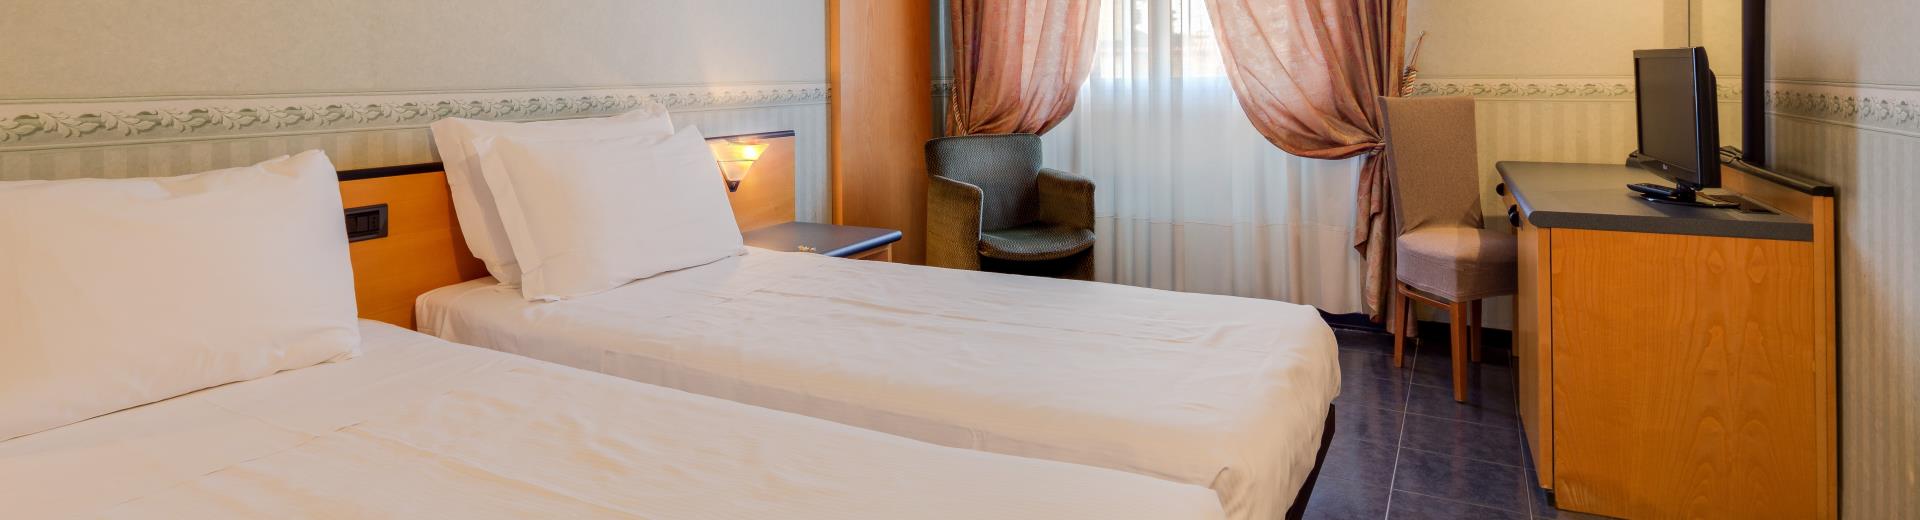 Economy rooms at Hotel San Donato Bologna 4 star